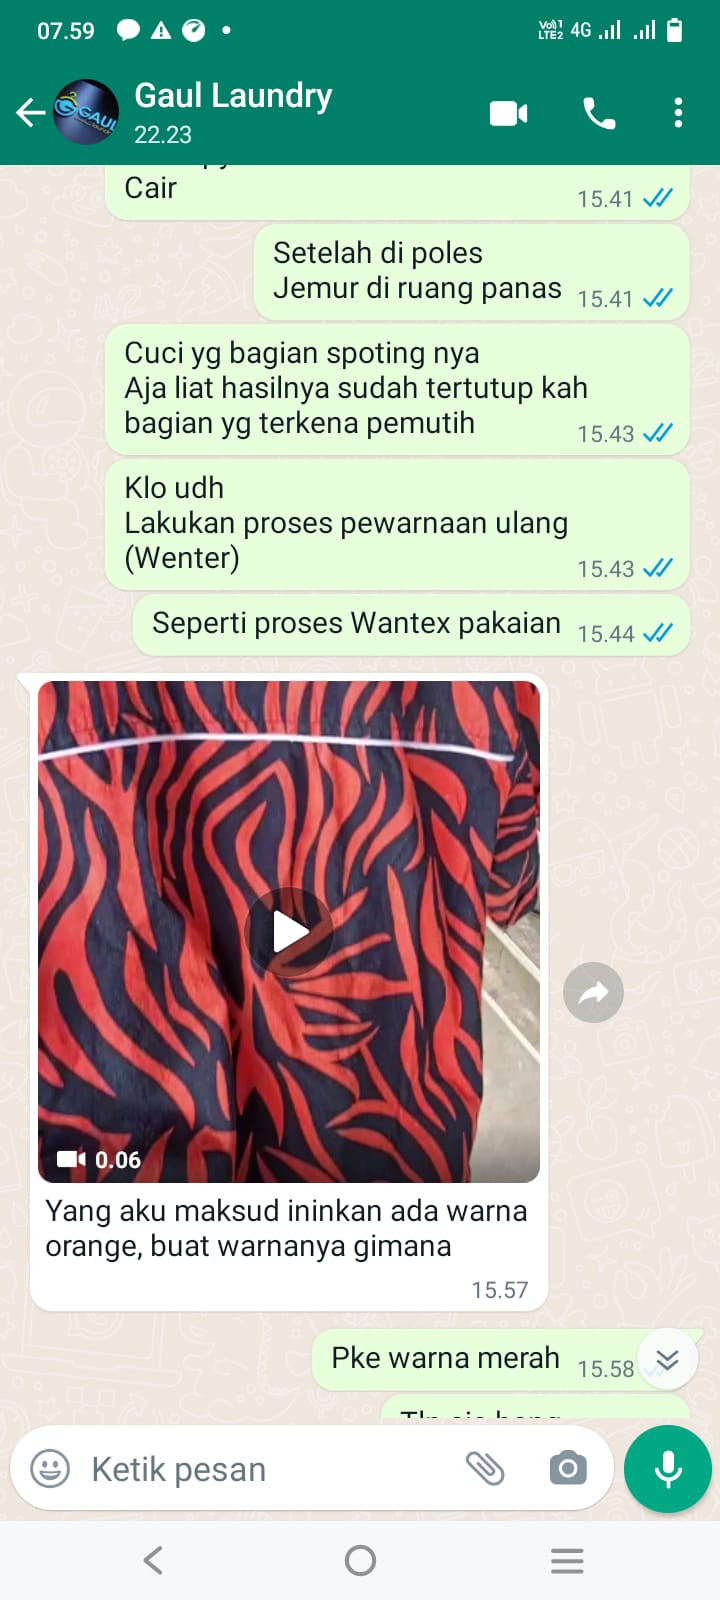 Jasa Wantex Pakaian Terbaik  Tanjung Selor